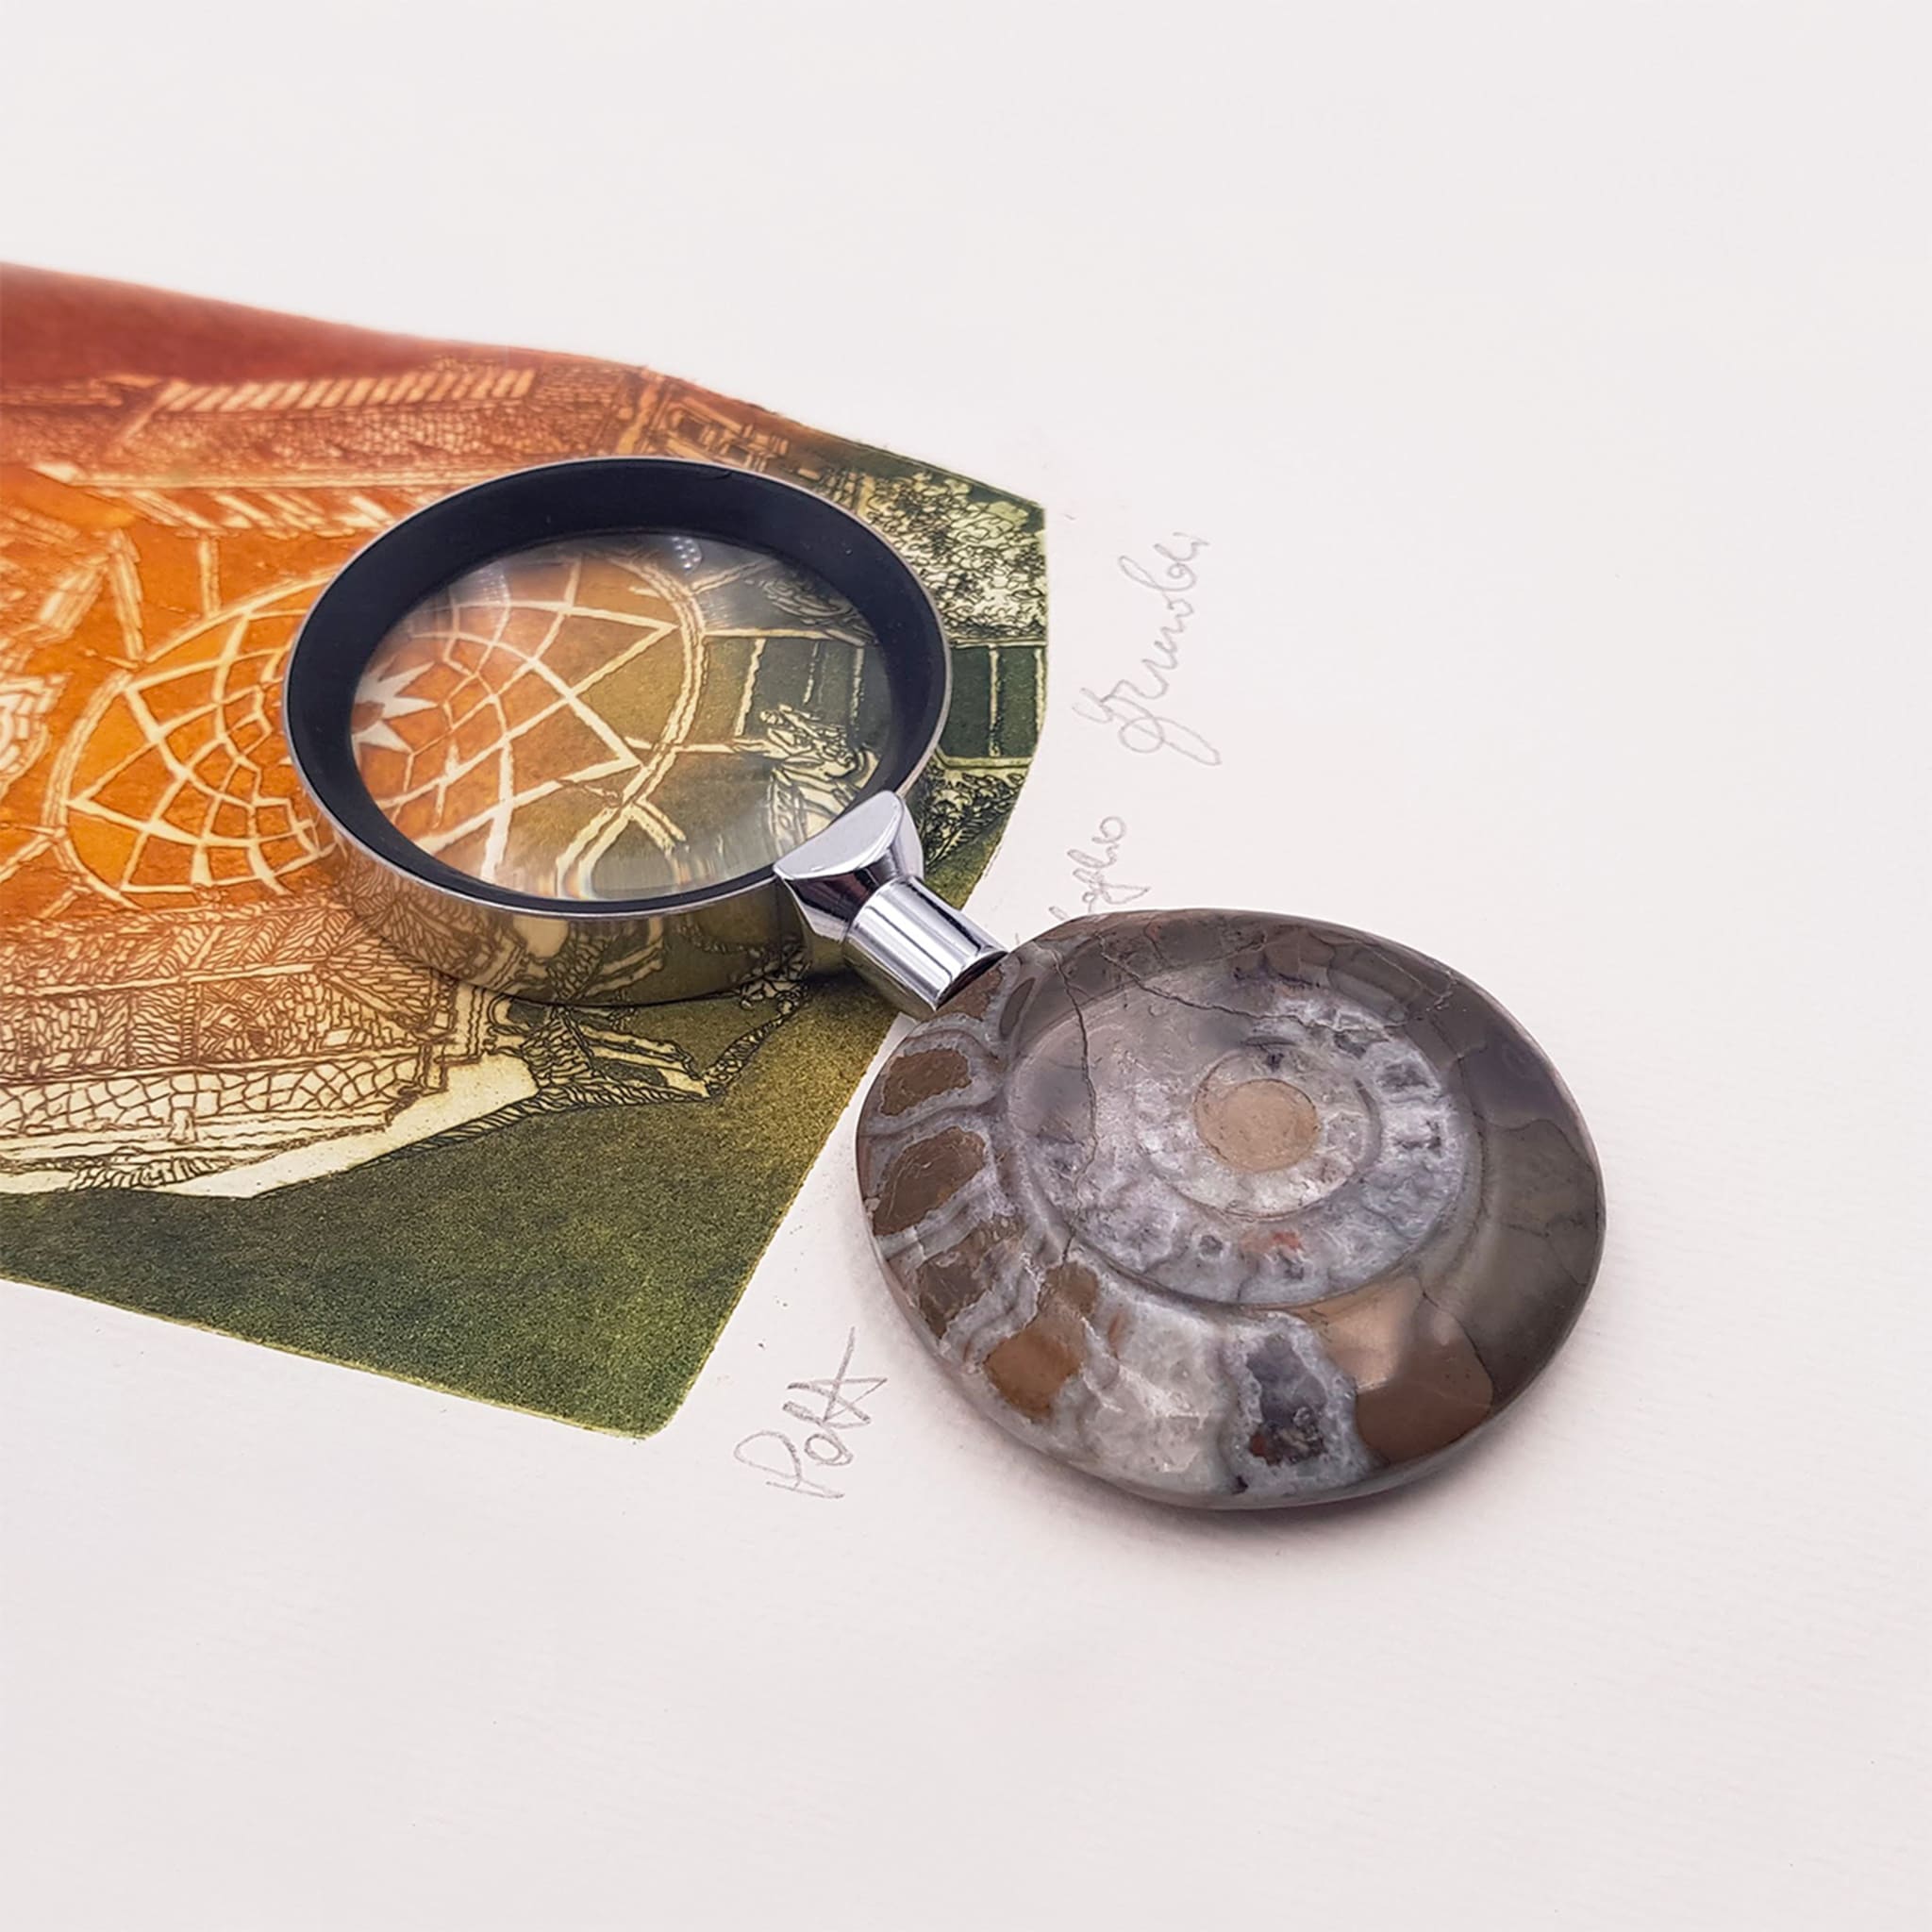 Ammonite Magnifying Glass by Nino Basso #2 - Alternative view 1